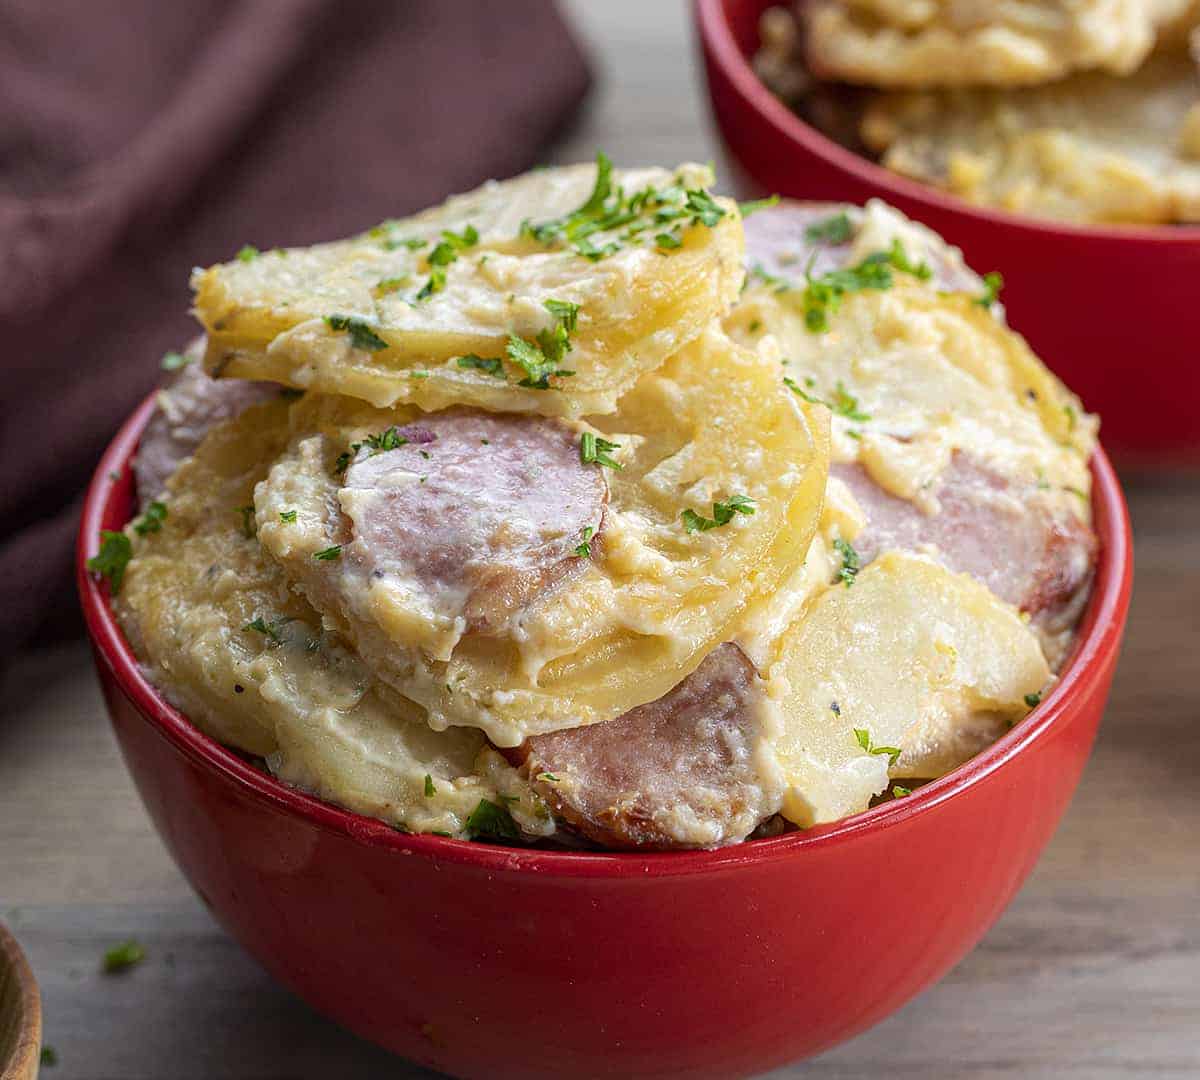 Bowl of Potatoes Au Gratin with Smoked Sausage